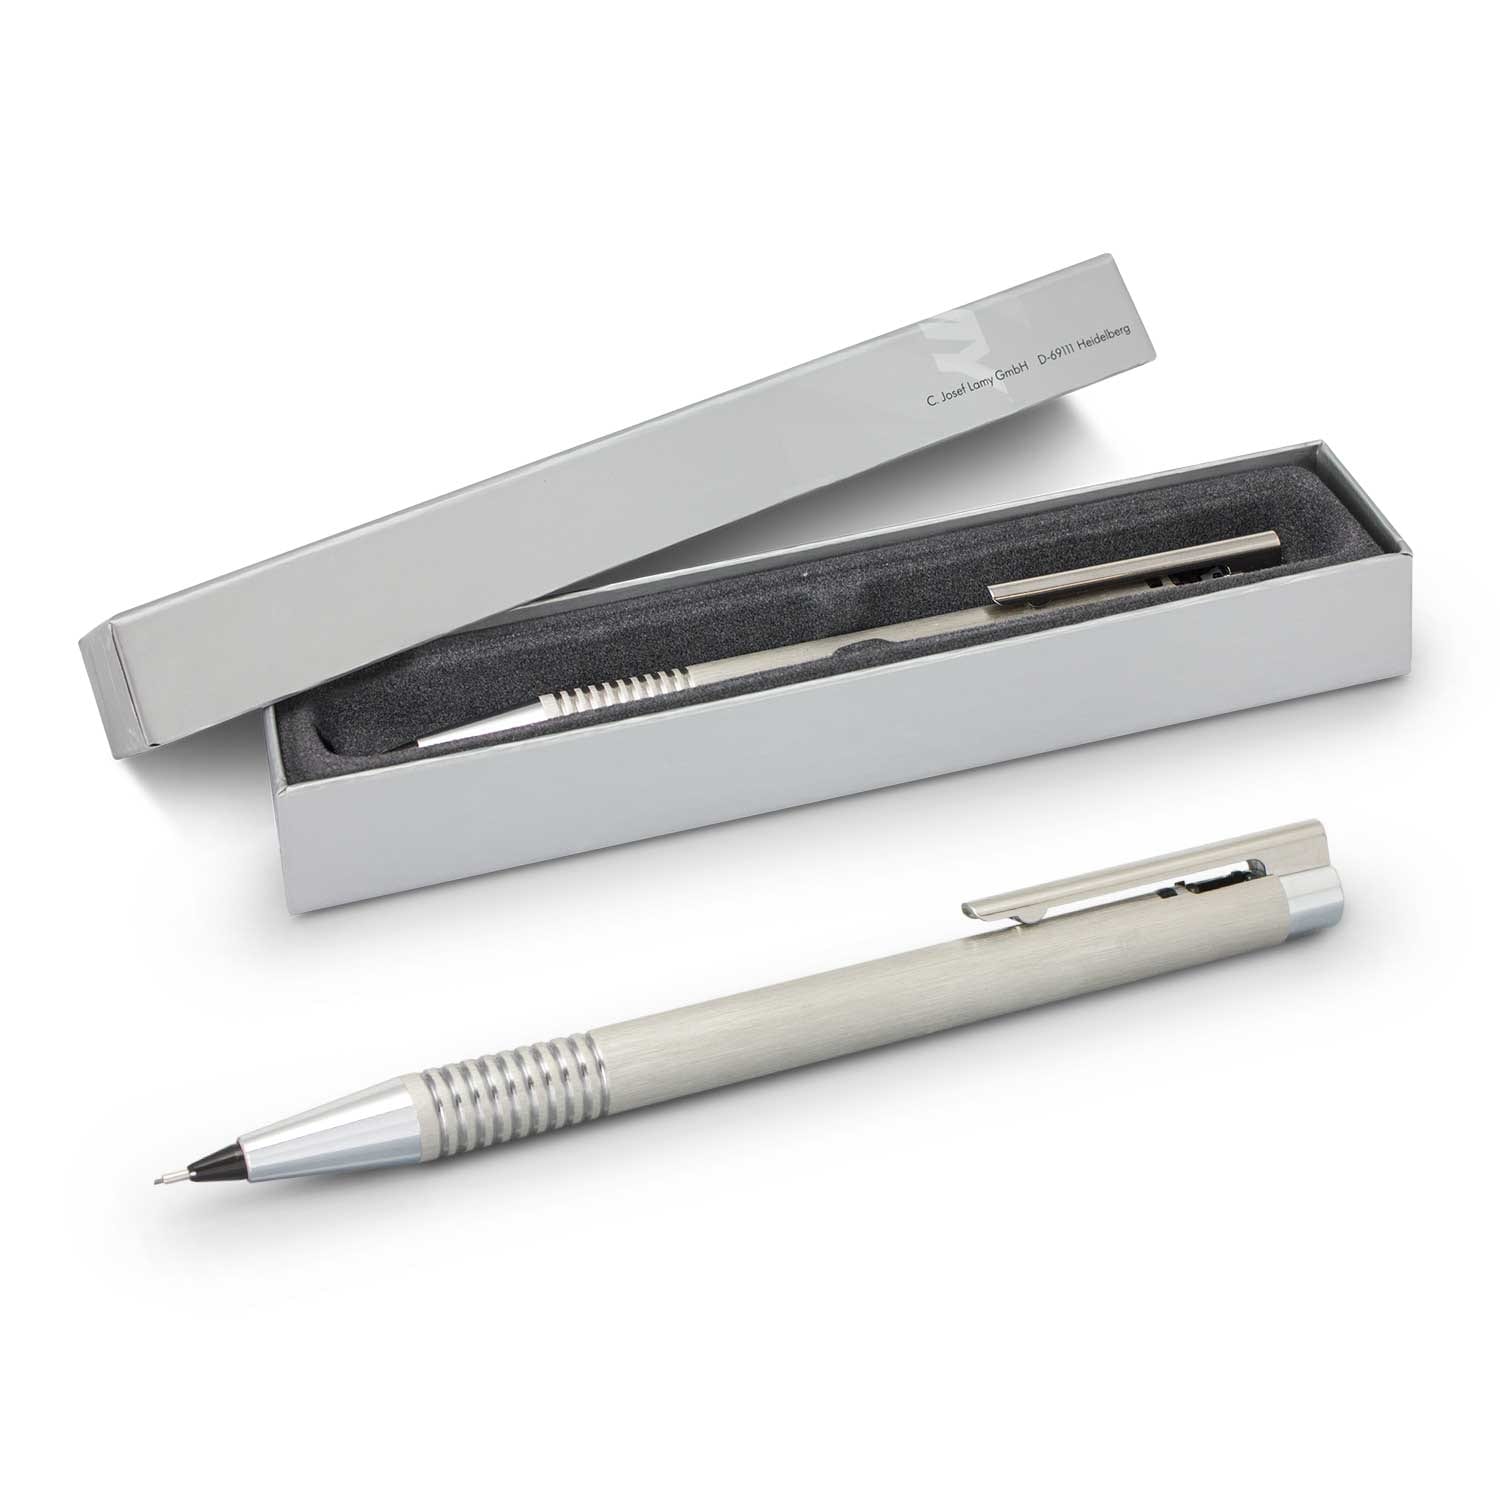 Deluxe Lamy Logo Pencil – Brushed Steel -